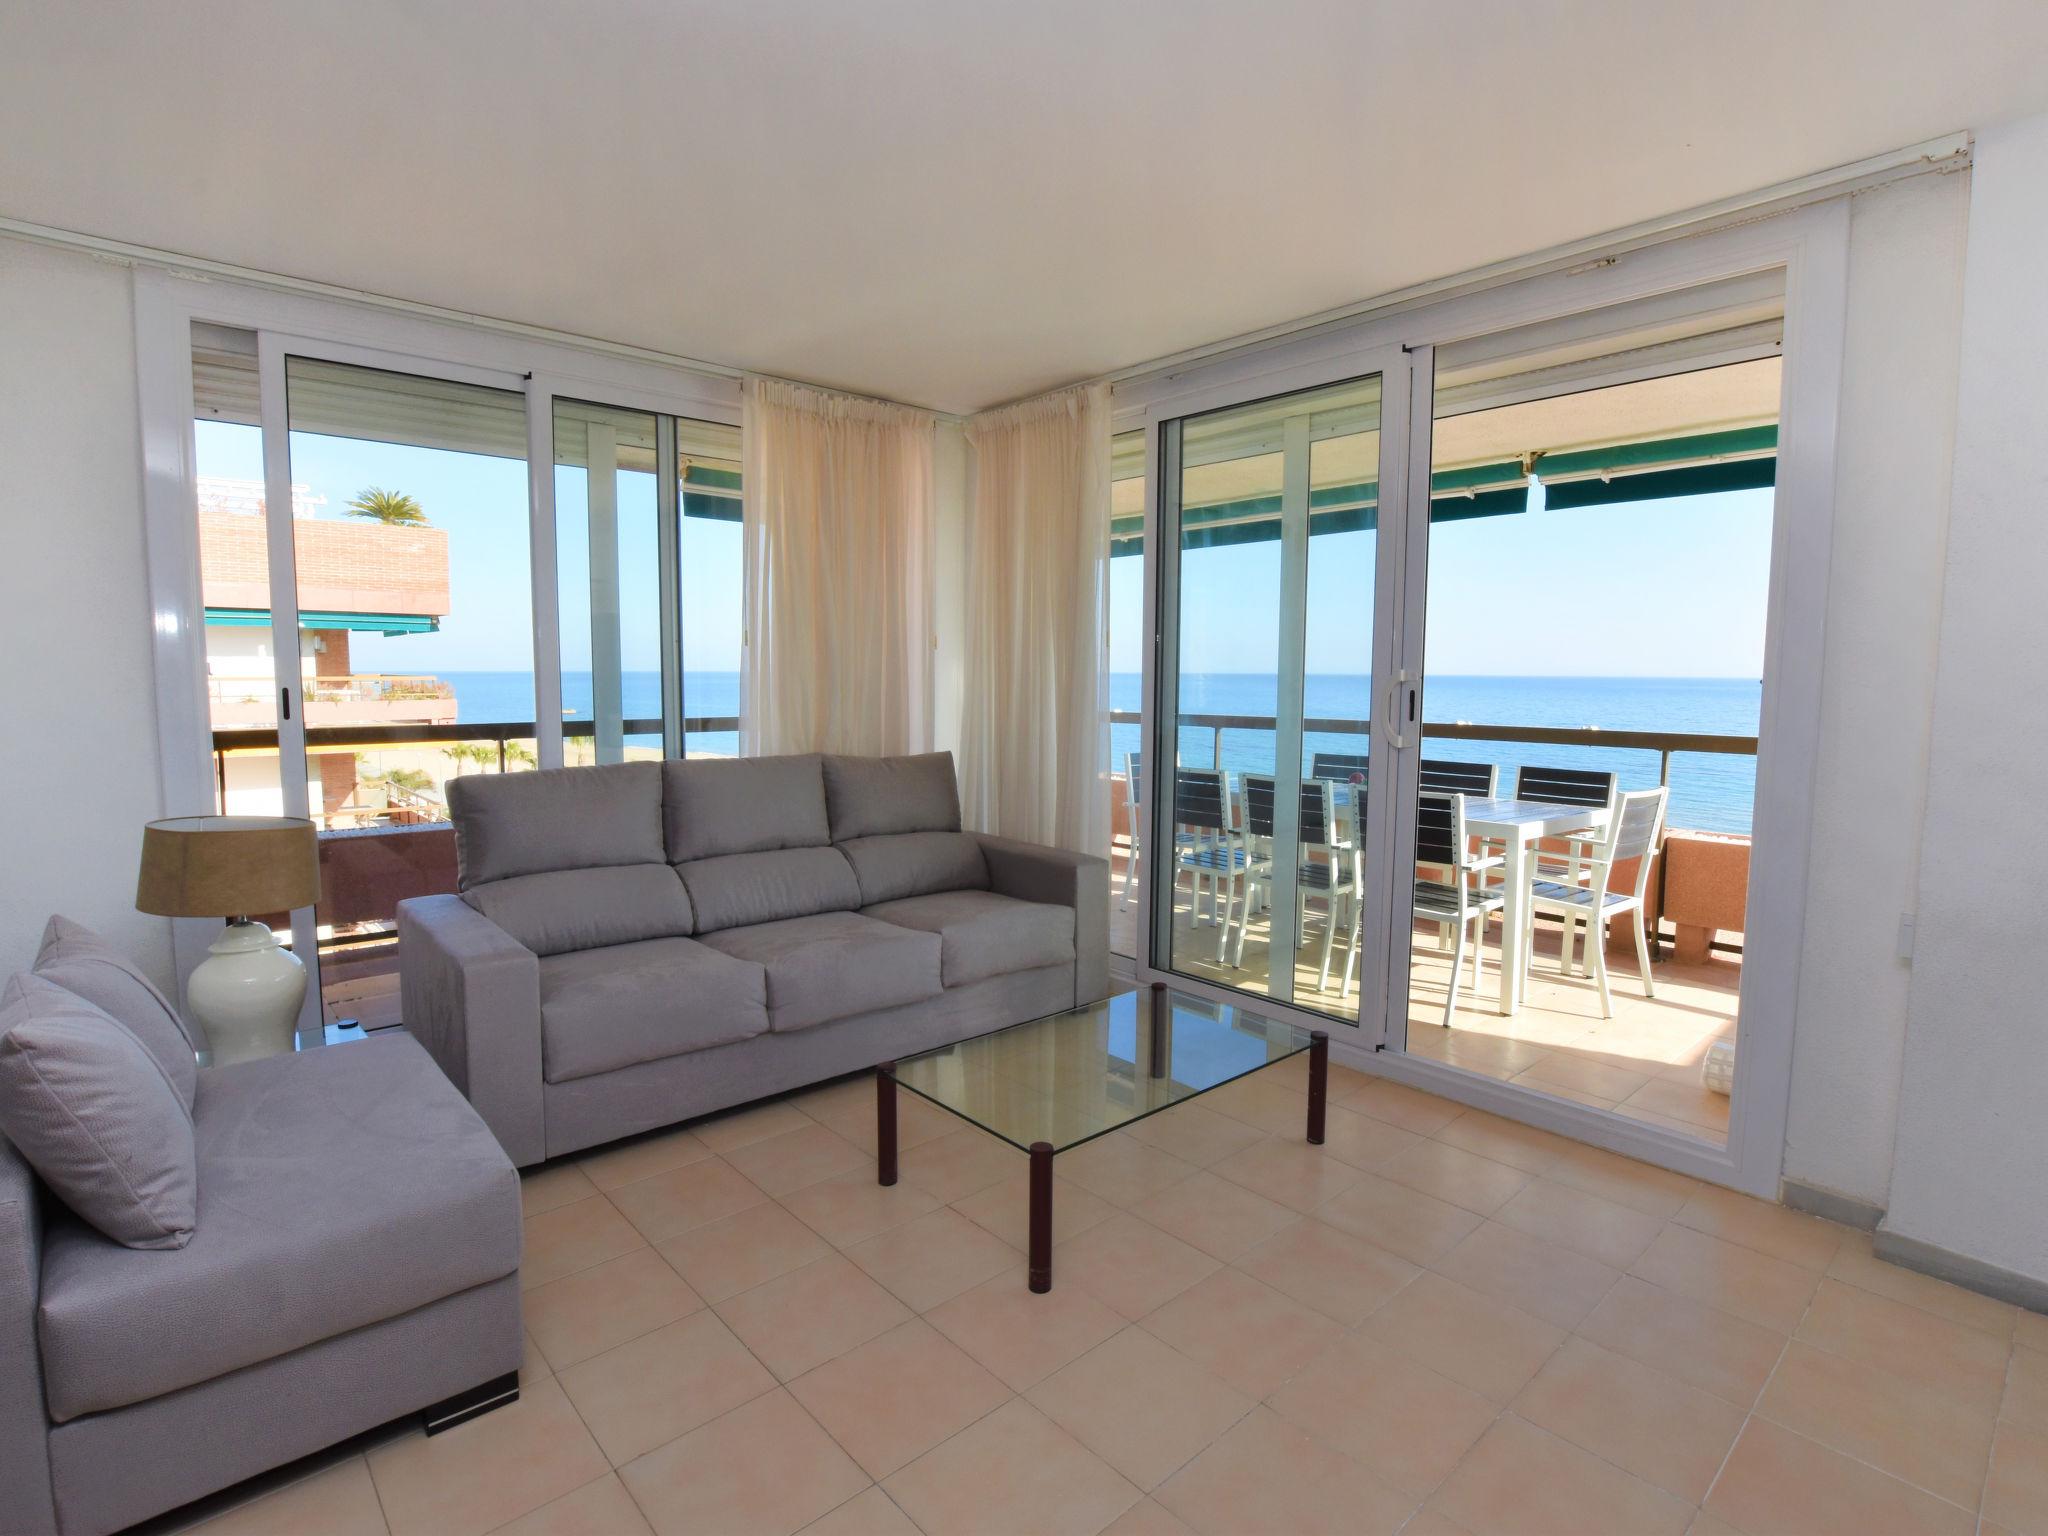 Photo 3 - Appartement de 4 chambres à Torredembarra avec piscine et vues à la mer